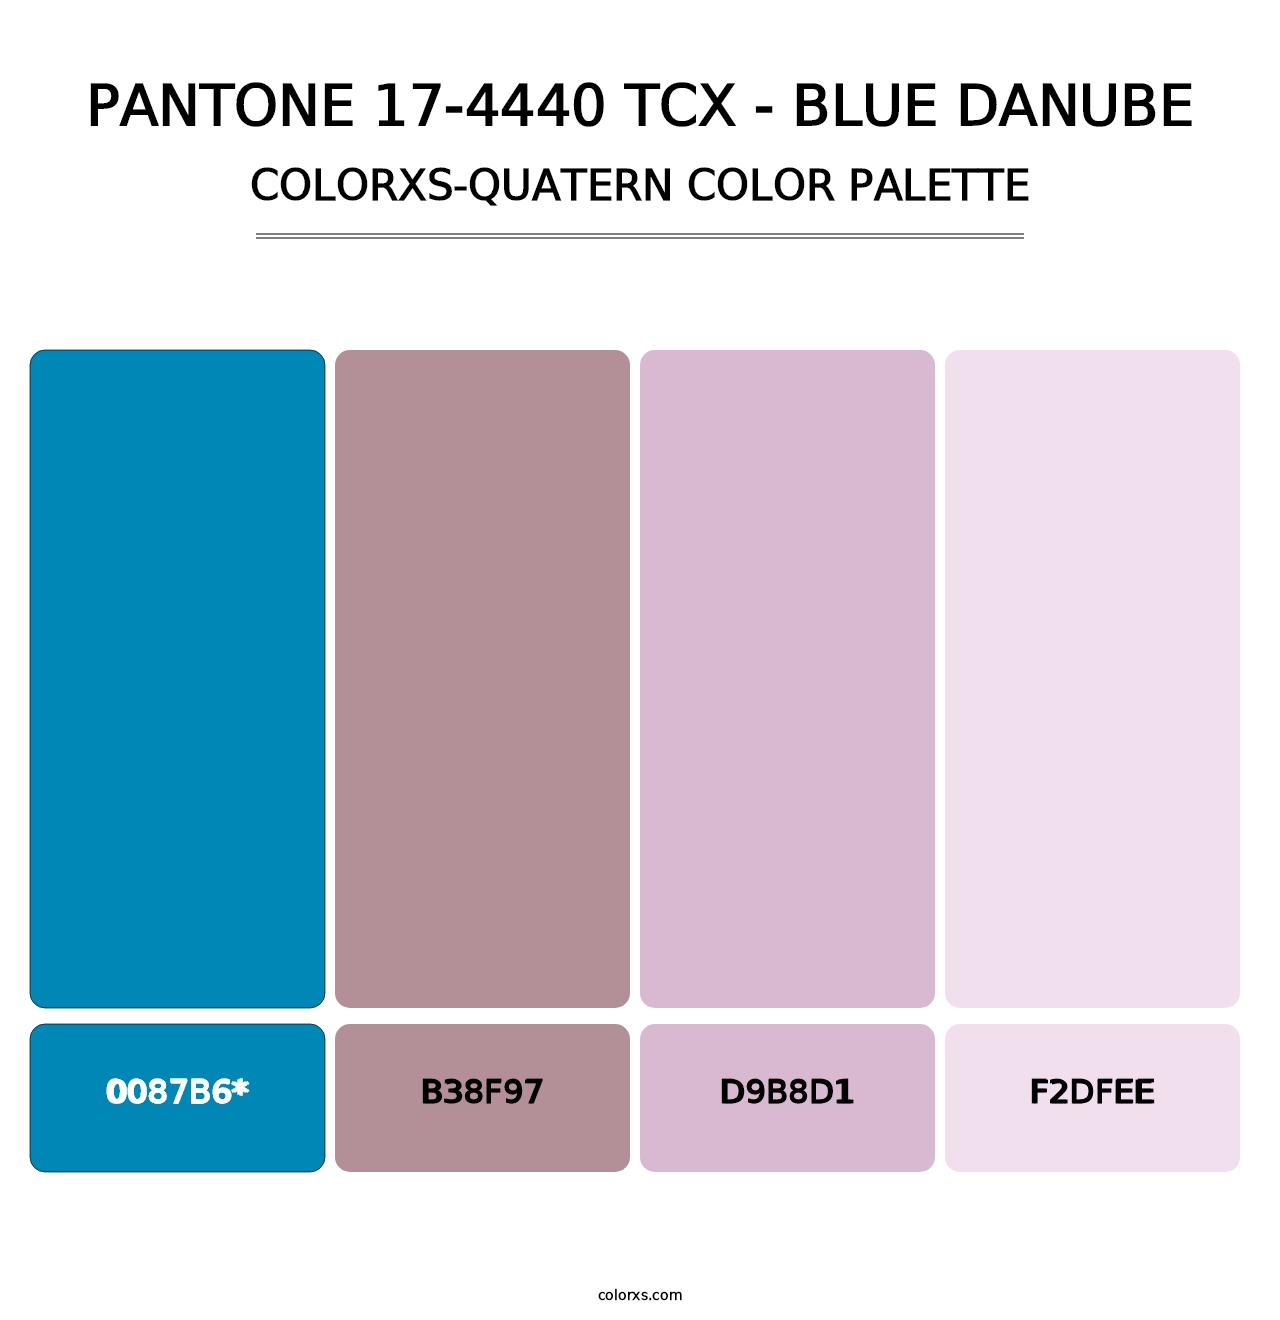 PANTONE 17-4440 TCX - Blue Danube - Colorxs Quatern Palette